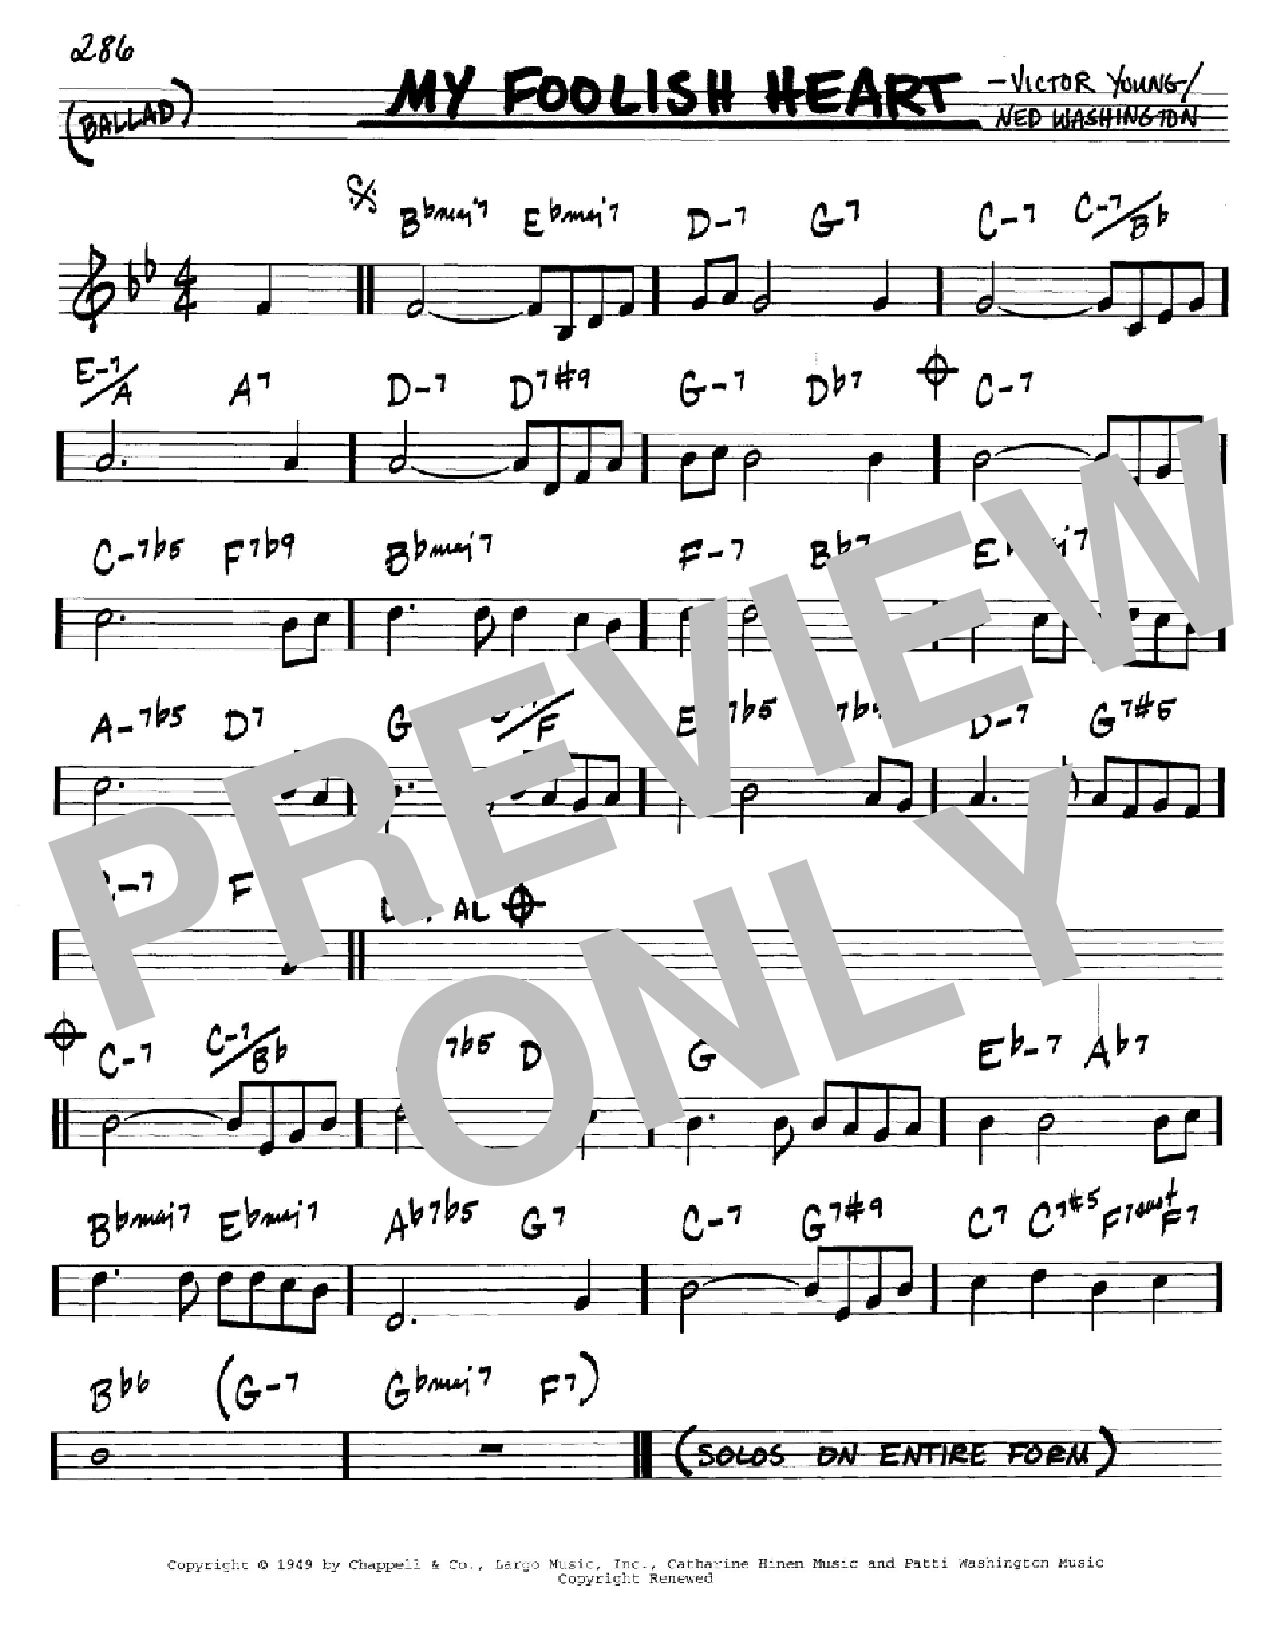 Ned Washington My Foolish Heart Sheet Music Notes & Chords for Real Book - Melody, Lyrics & Chords - C Instruments - Download or Print PDF